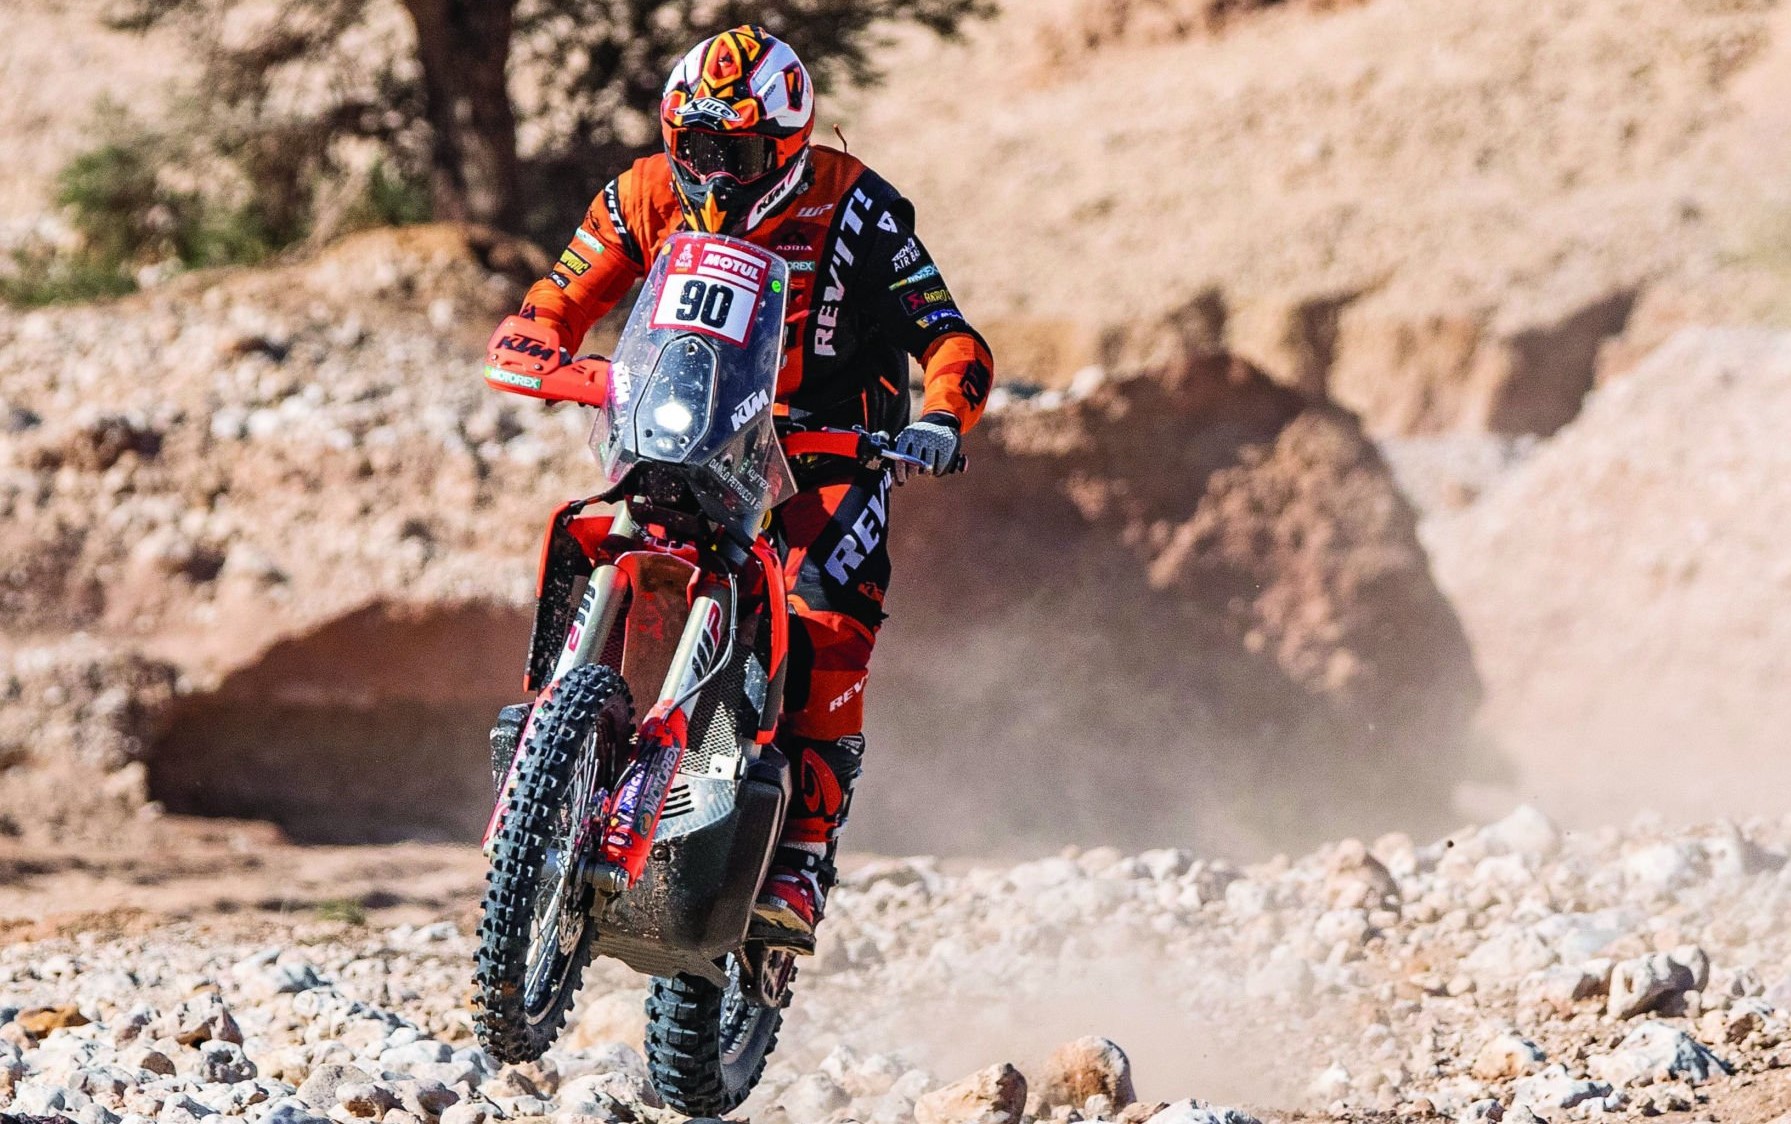 Former MotoGP rider Danilo Petrucci wins Dakar stage 5